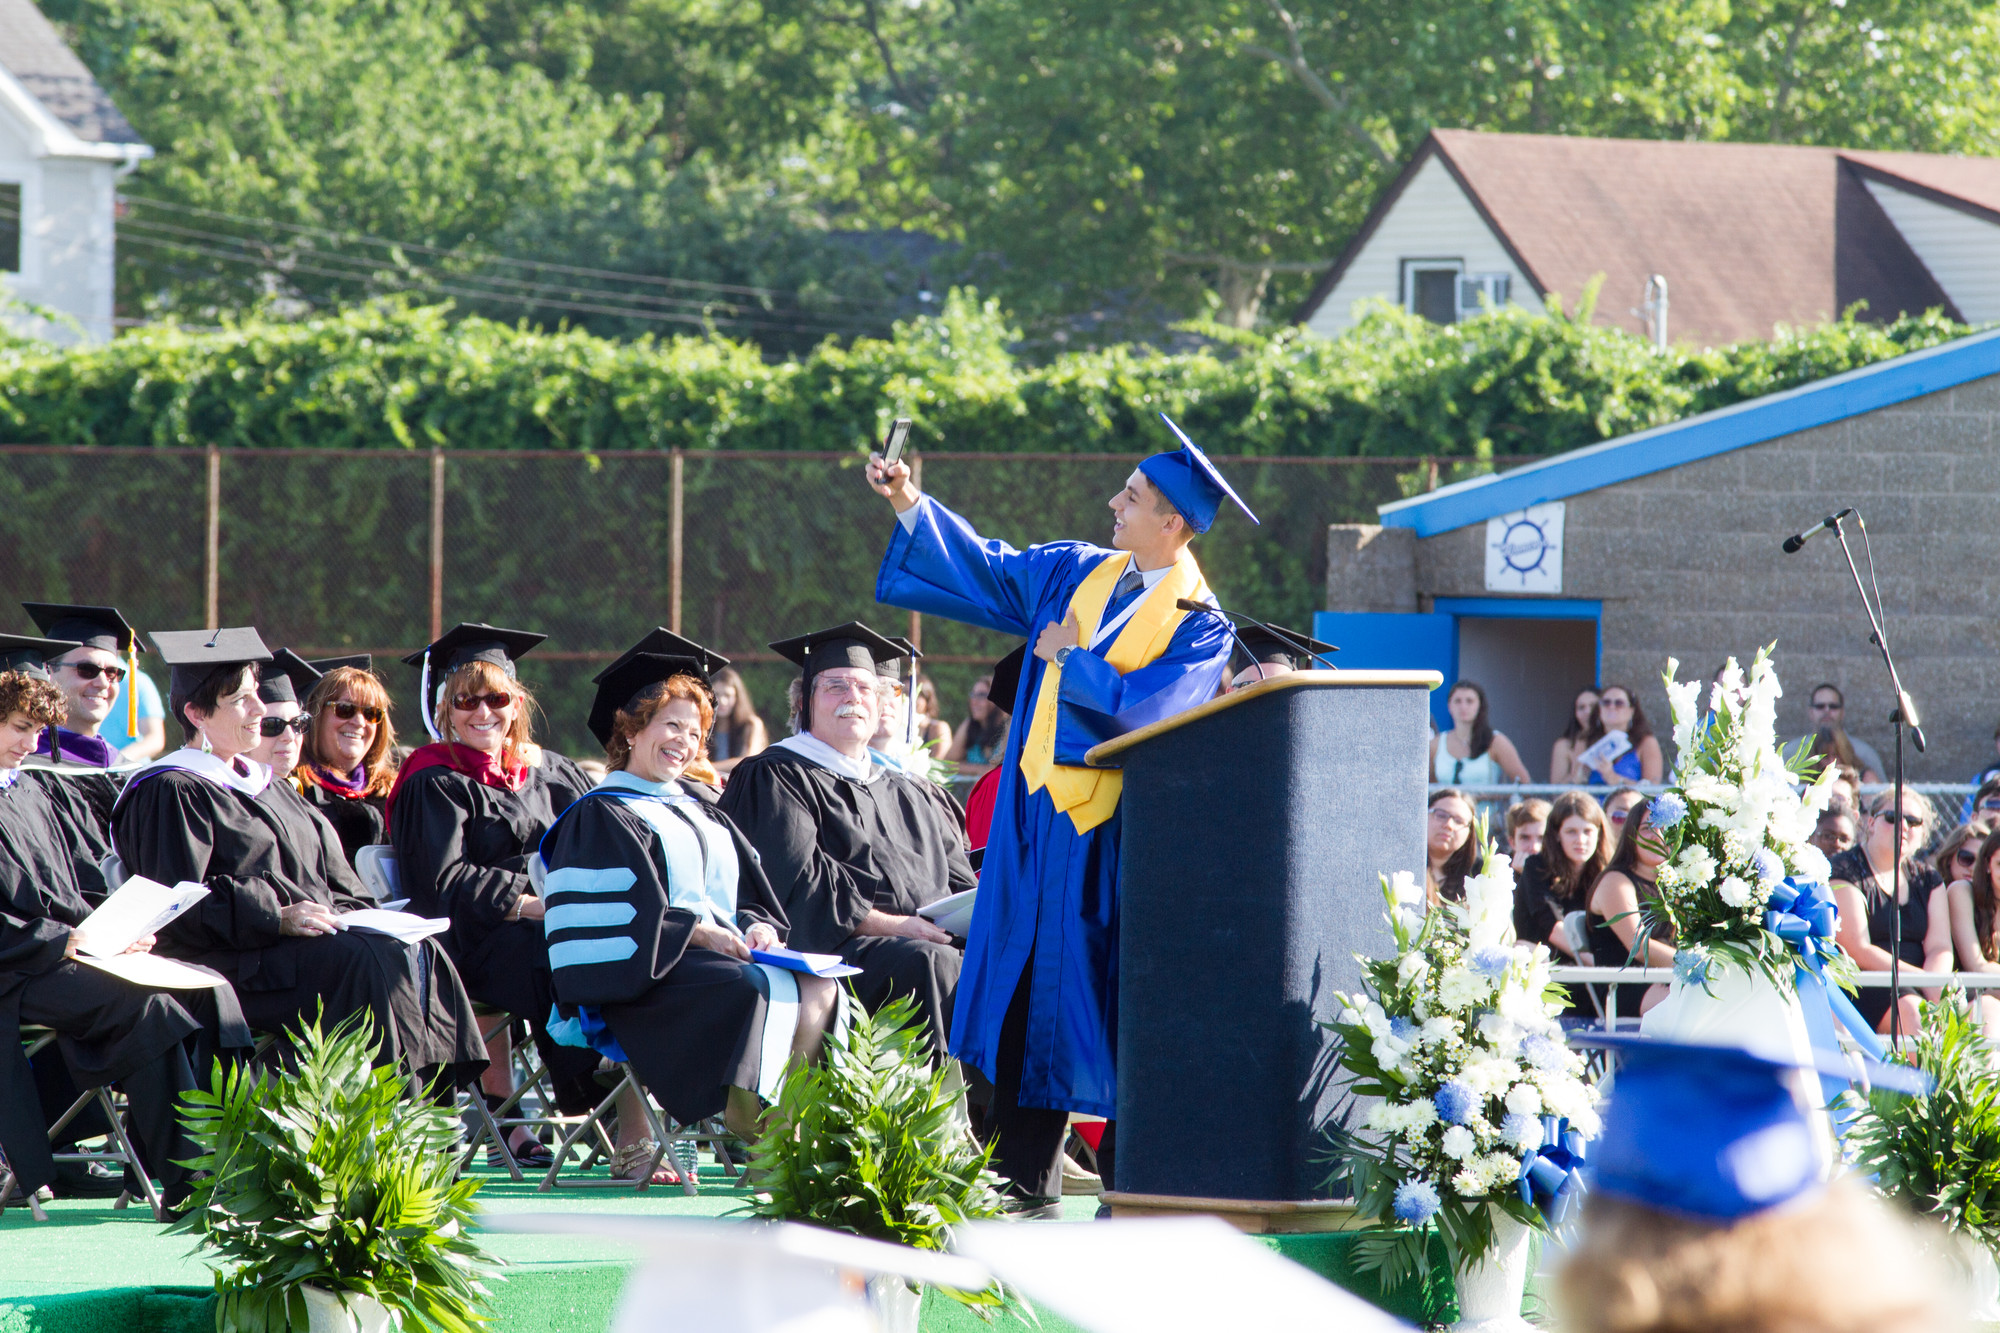 Valedictorian Alan Khaykin took a selfie during his speech at the graduation ceremony.